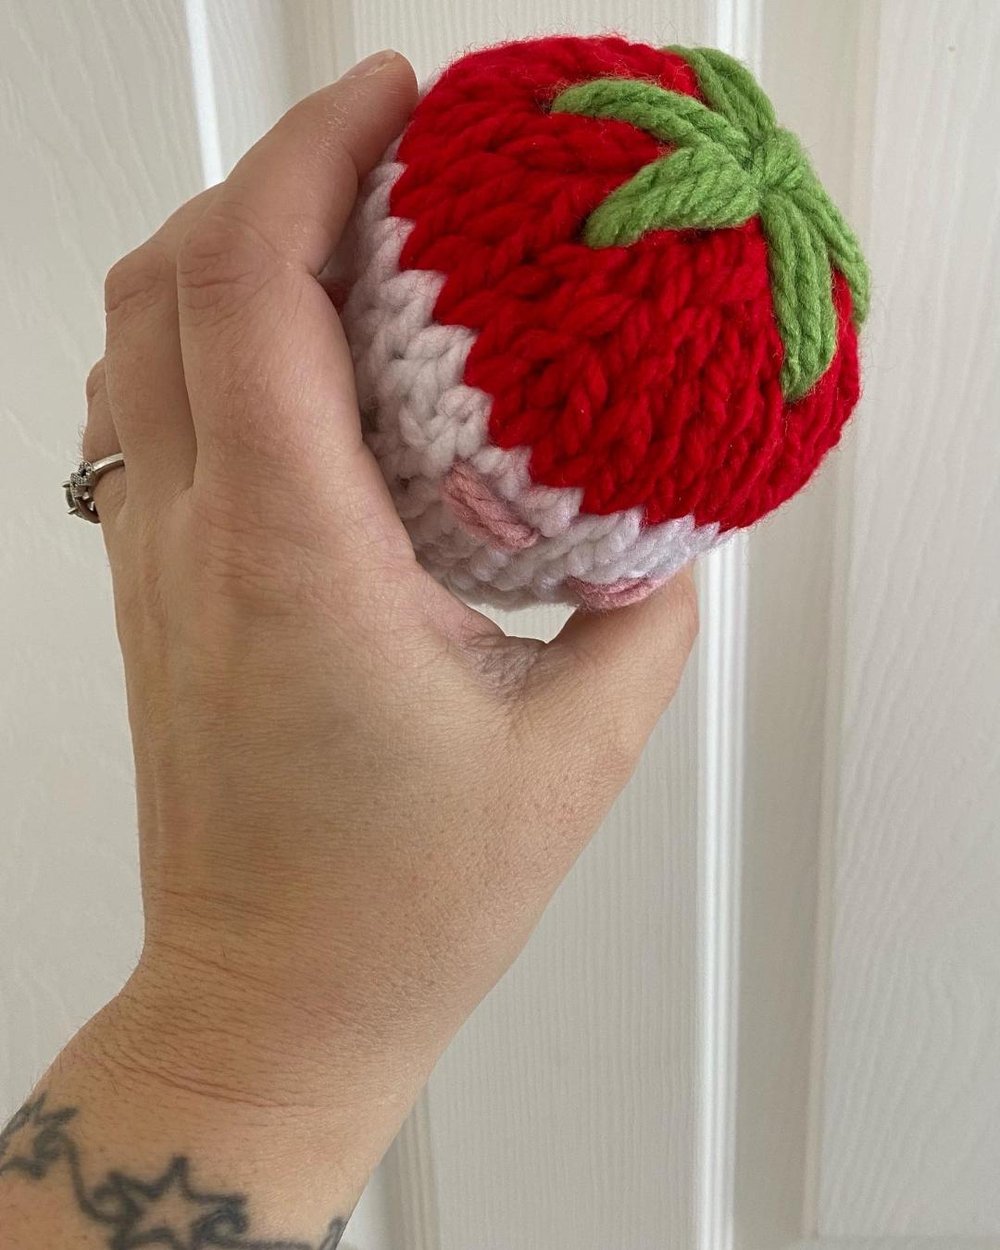 Giant Strawberry.jpg